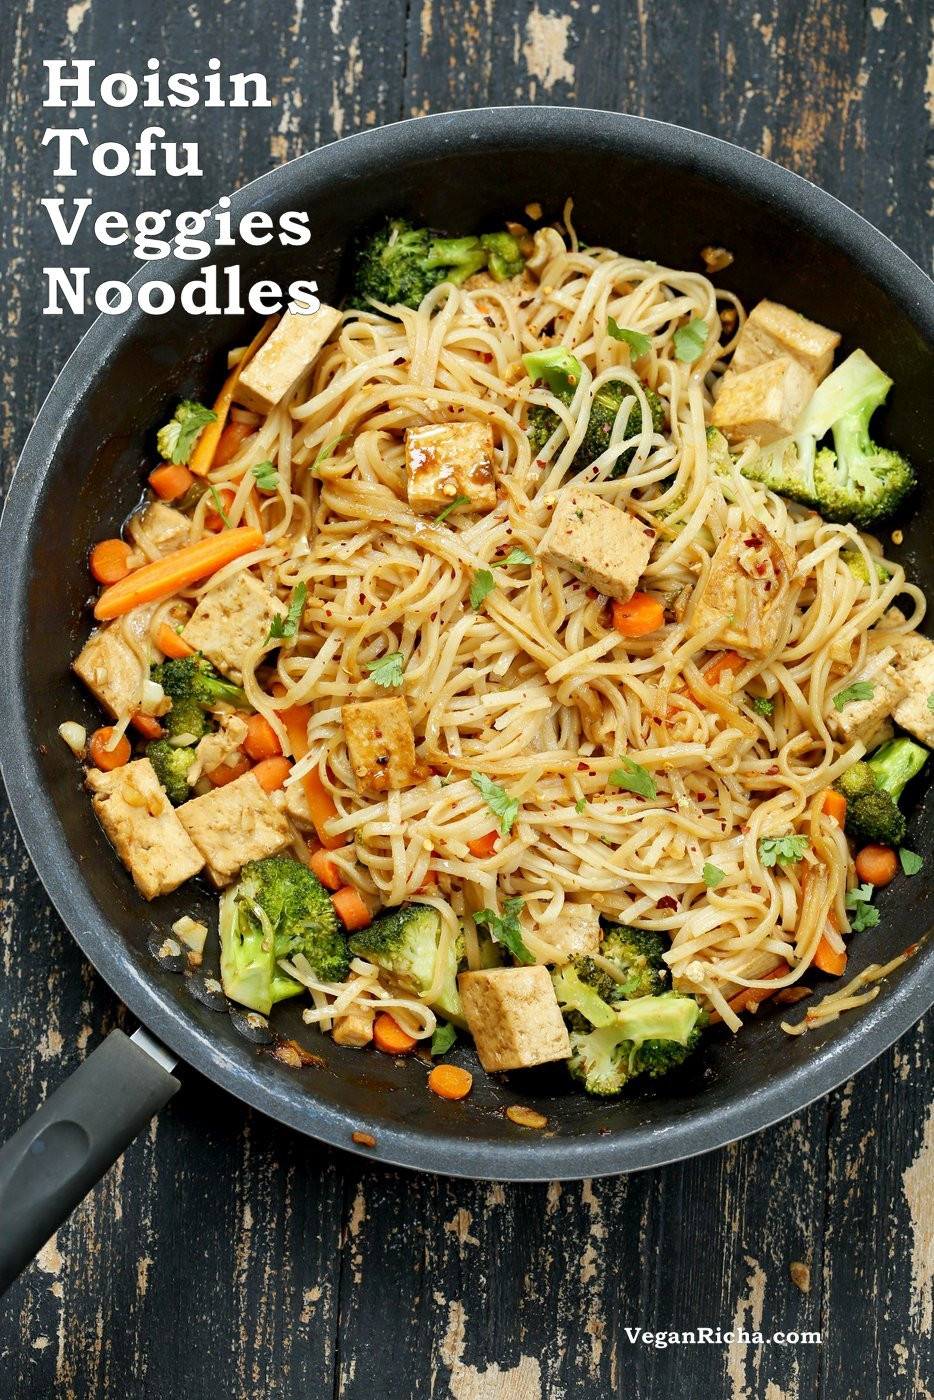 Make Rice Noodles
 Tofu and Brown Rice Noodles in Hoisin Sauce Vegan Richa